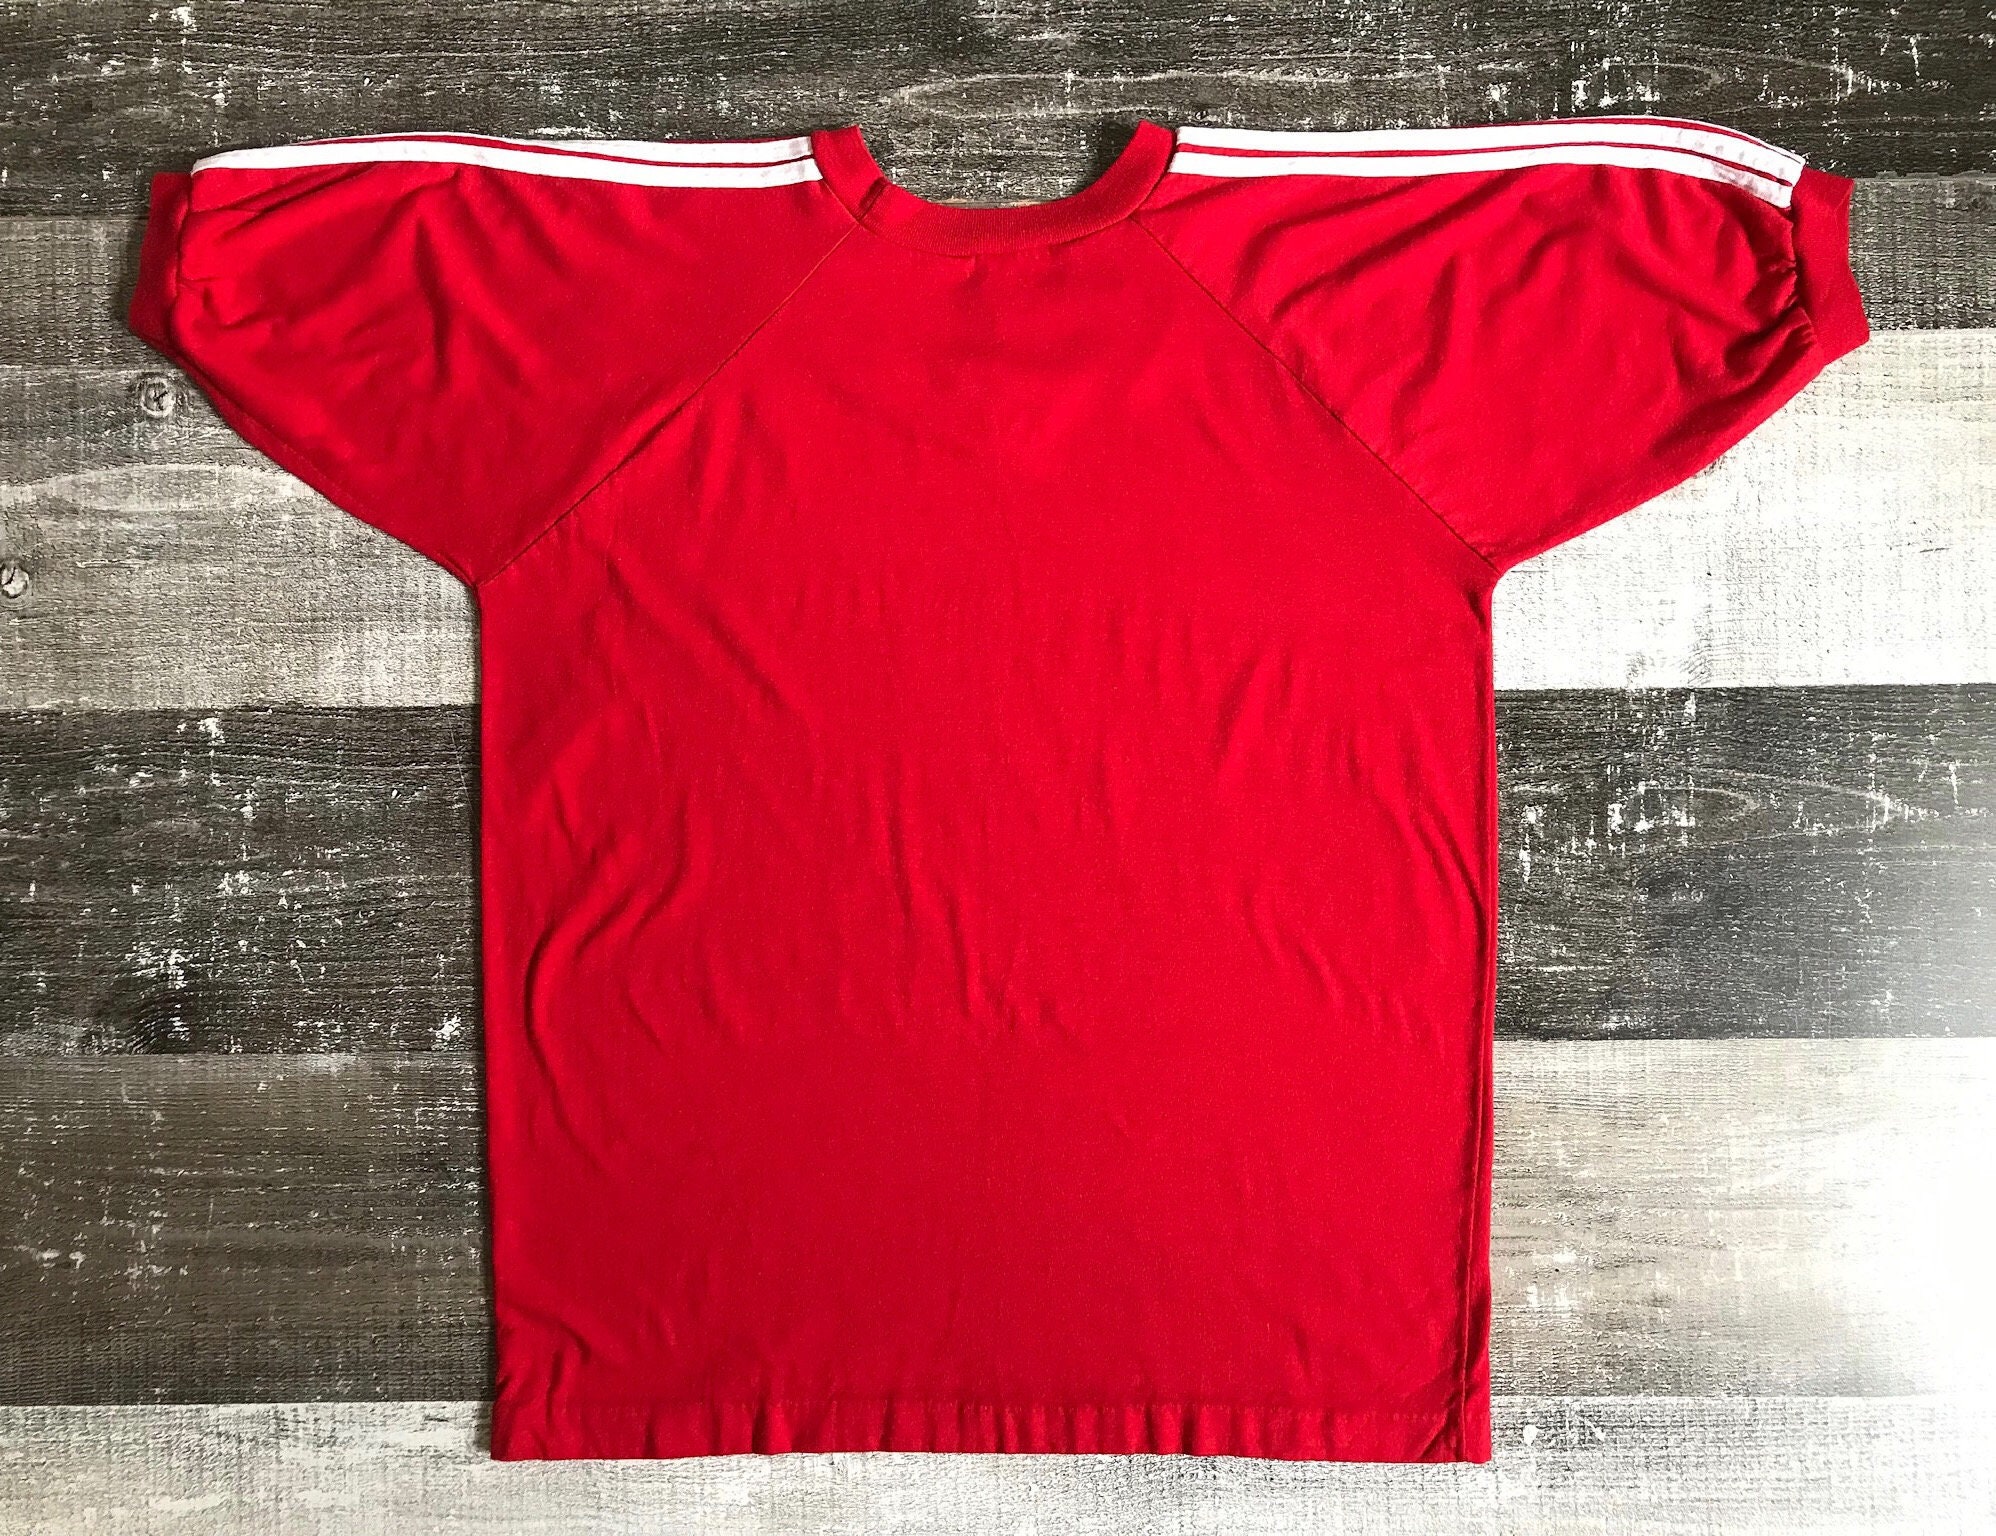 Vintage 1970's Nashville T-shirt Retro Graphic Tee Red | Etsy